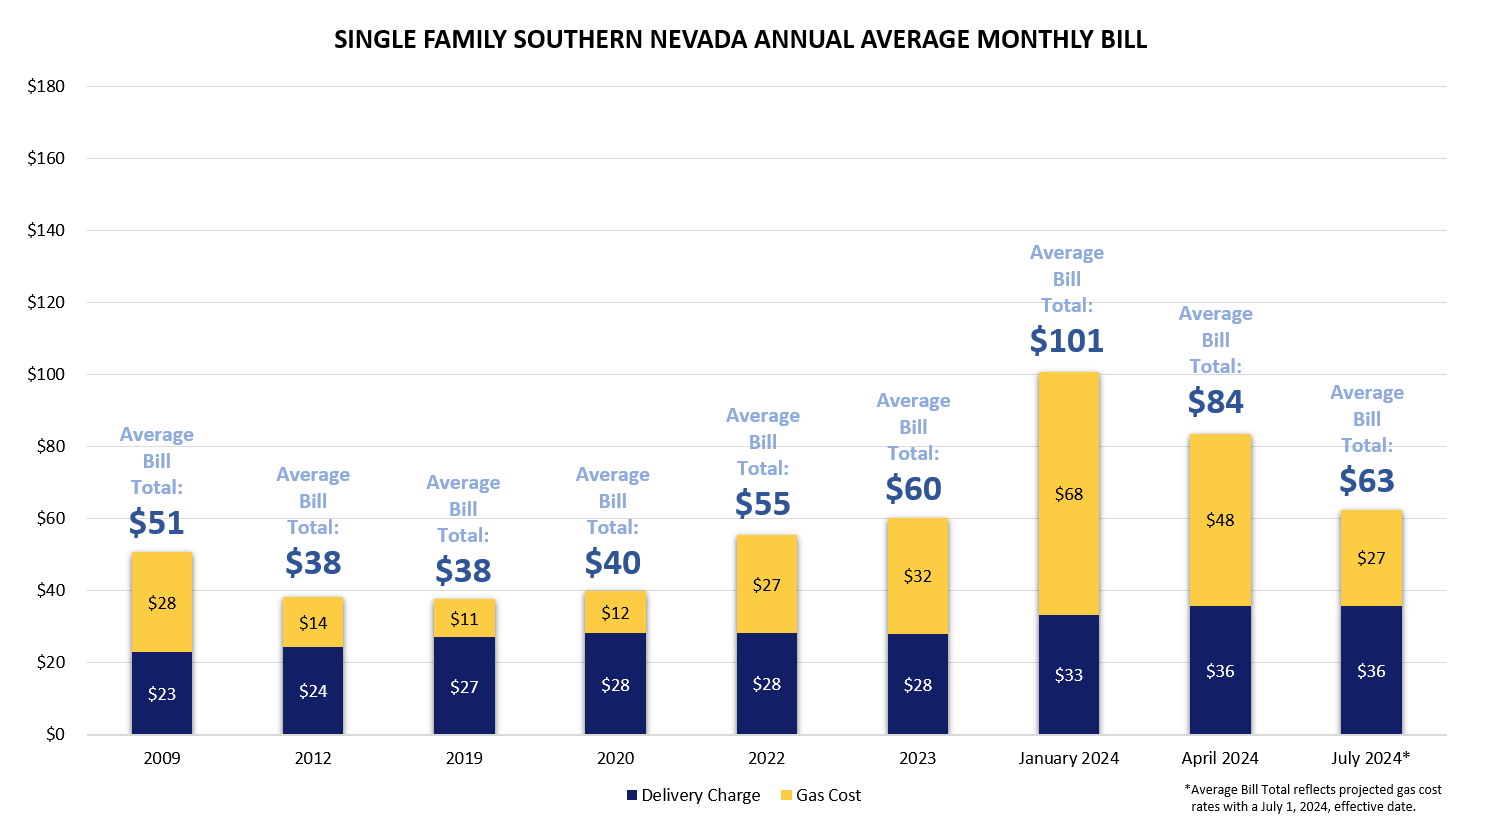 Average Bill SNV Image